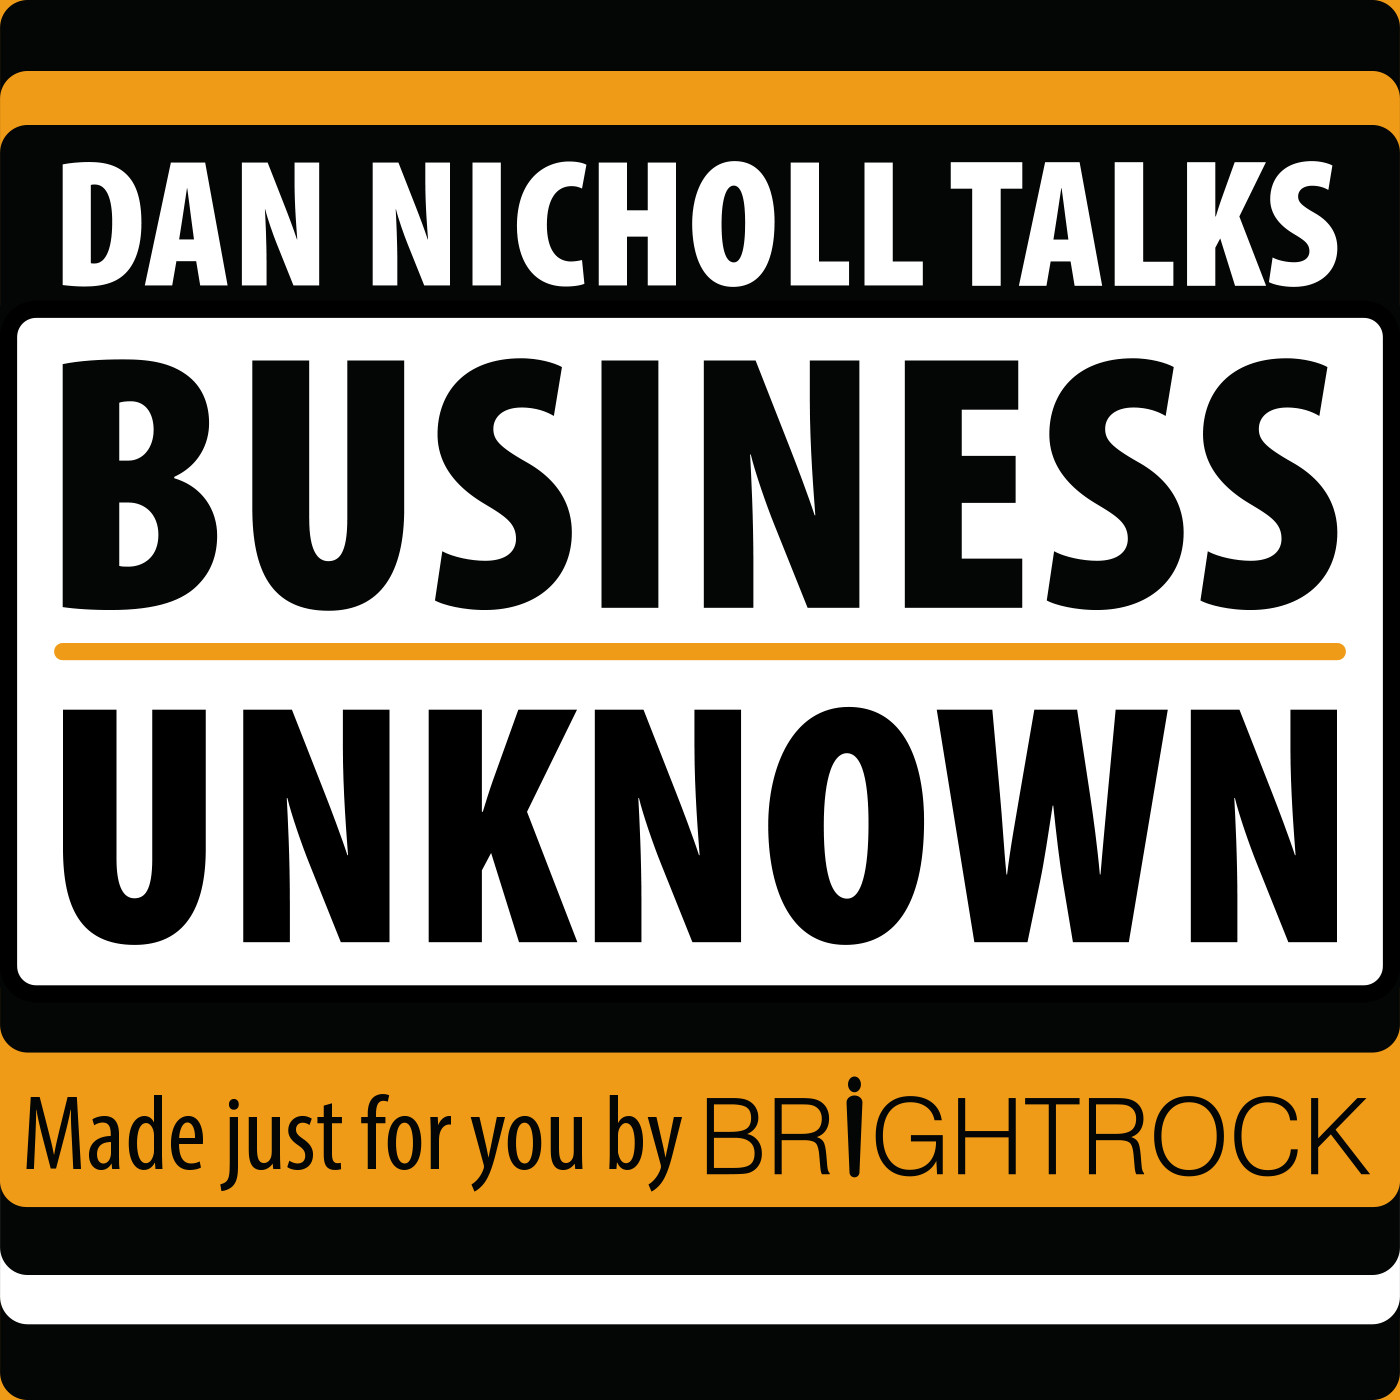 Dan Nicholl Talks Business Unknown with Richard Rushton